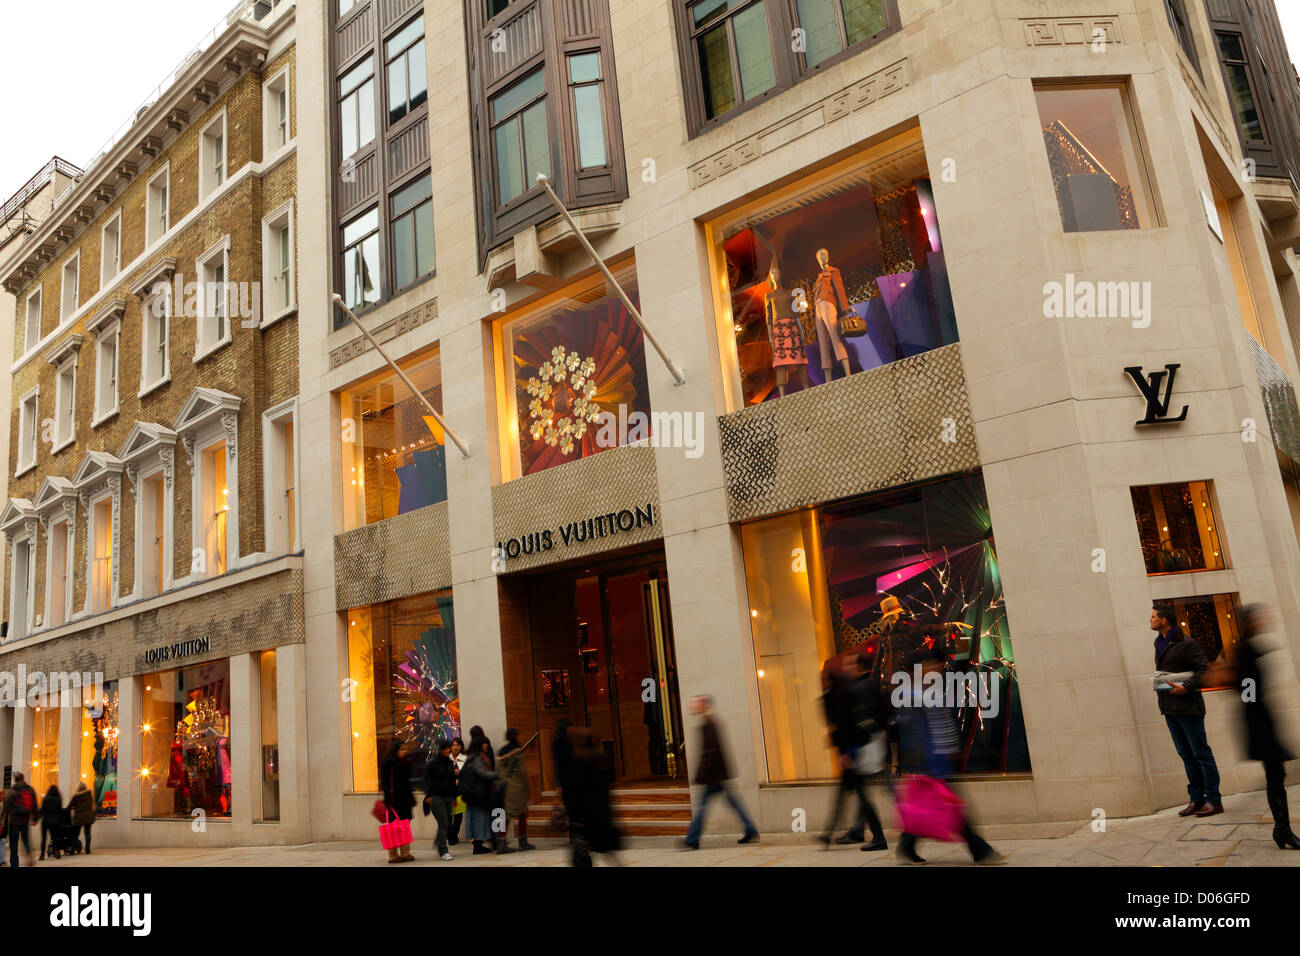 The Louis Vuitton Store In New Bond Street, London, England Stock Photo -  Alamy